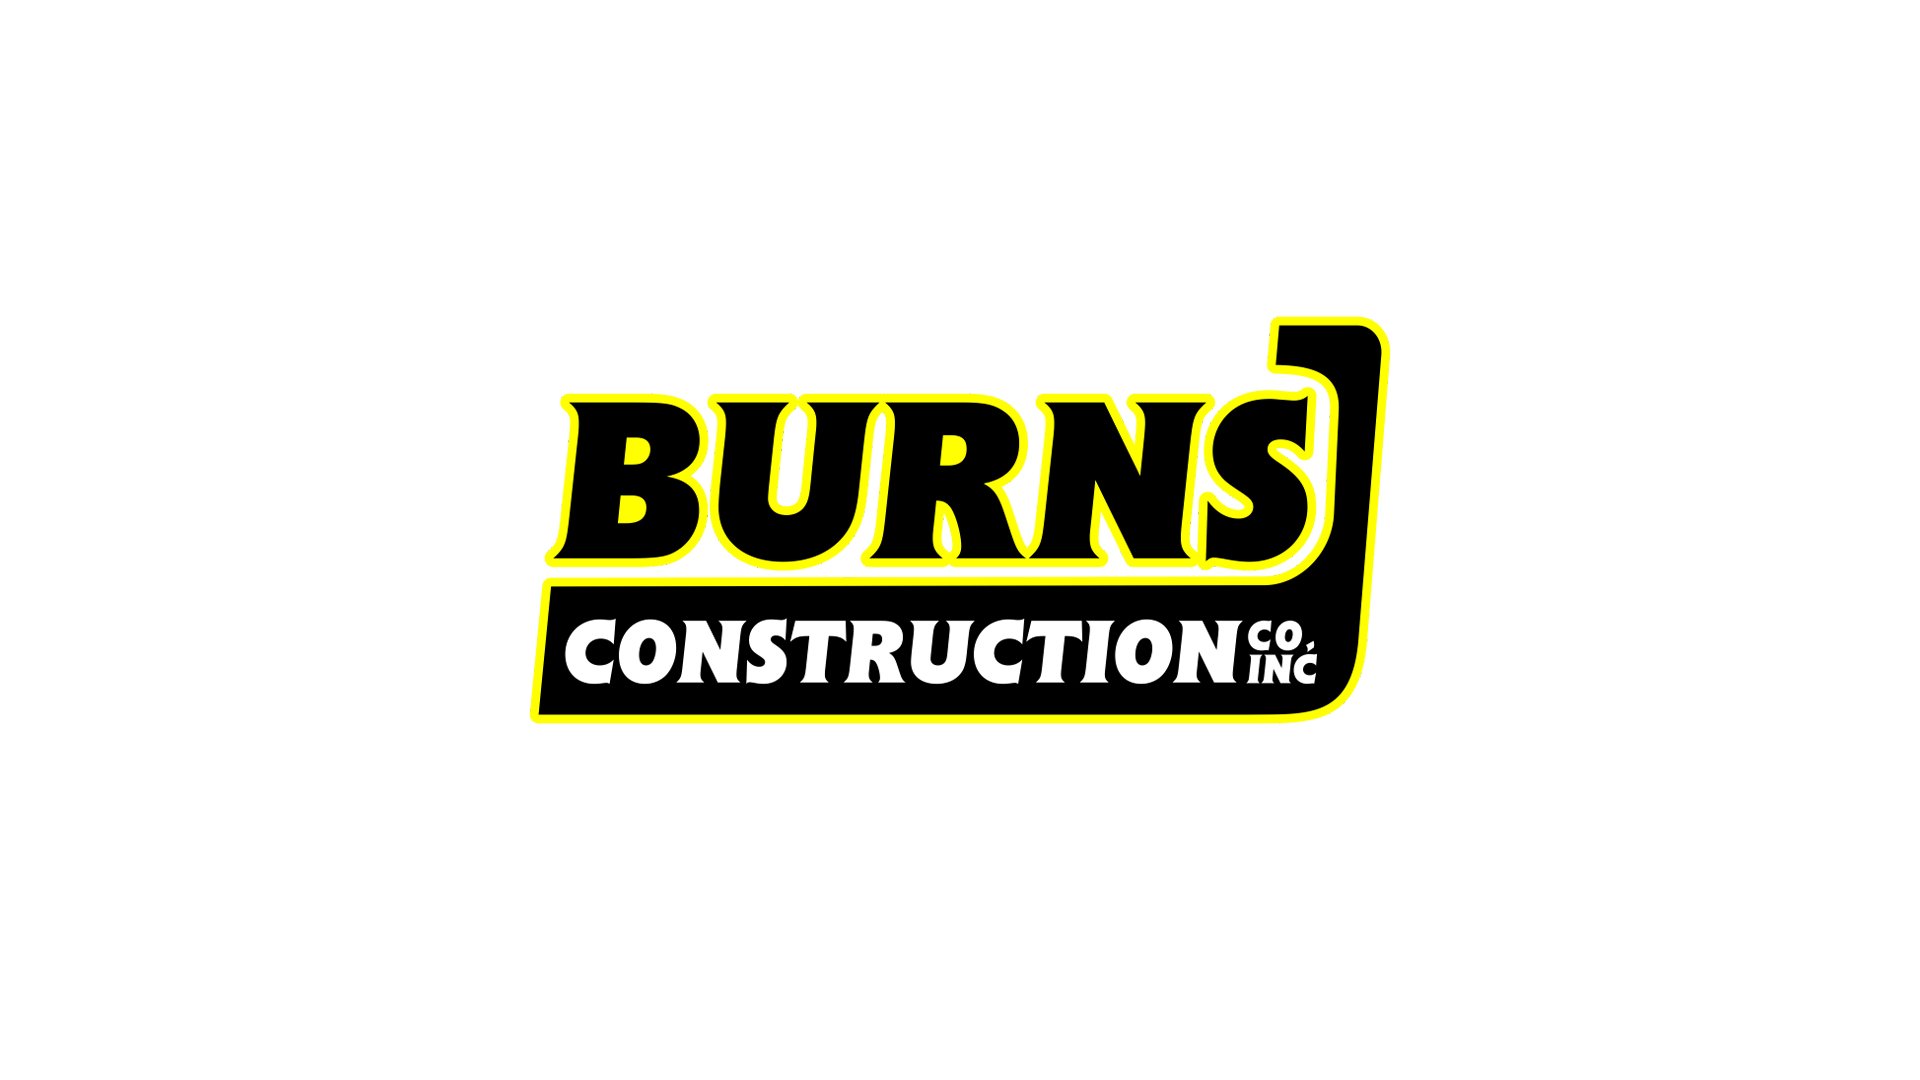 Burns Construction Company